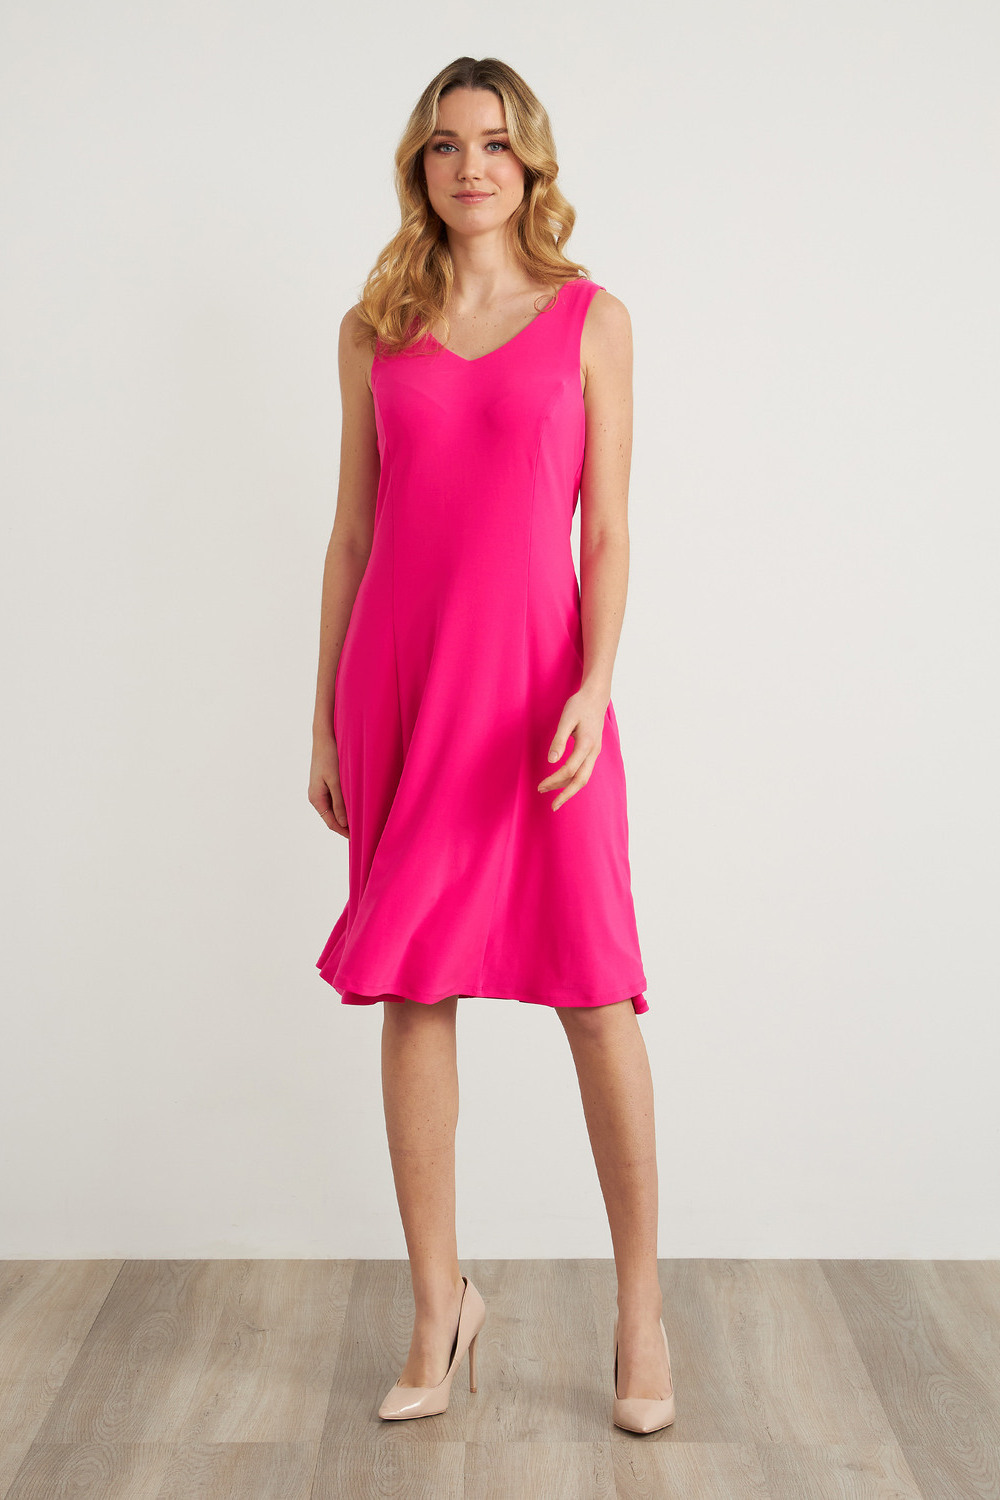 Joseph Ribkoff Fit & Flare Dress Style 211316. Azalea